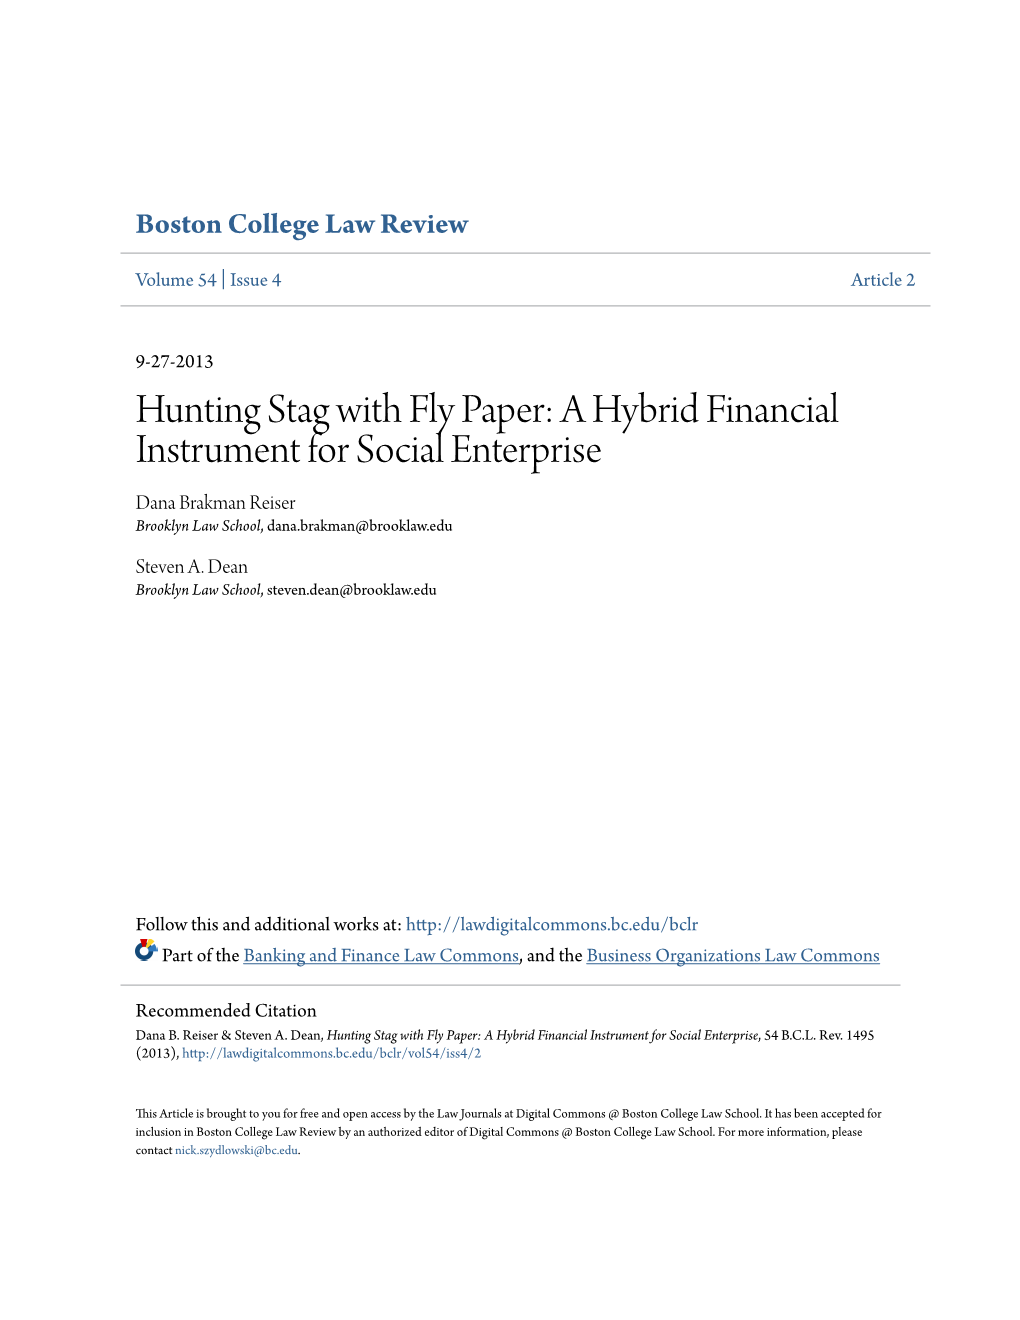 Hunting Stag with Fly Paper: a Hybrid Financial Instrument for Social Enterprise Dana Brakman Reiser Brooklyn Law School, Dana.Brakman@Brooklaw.Edu